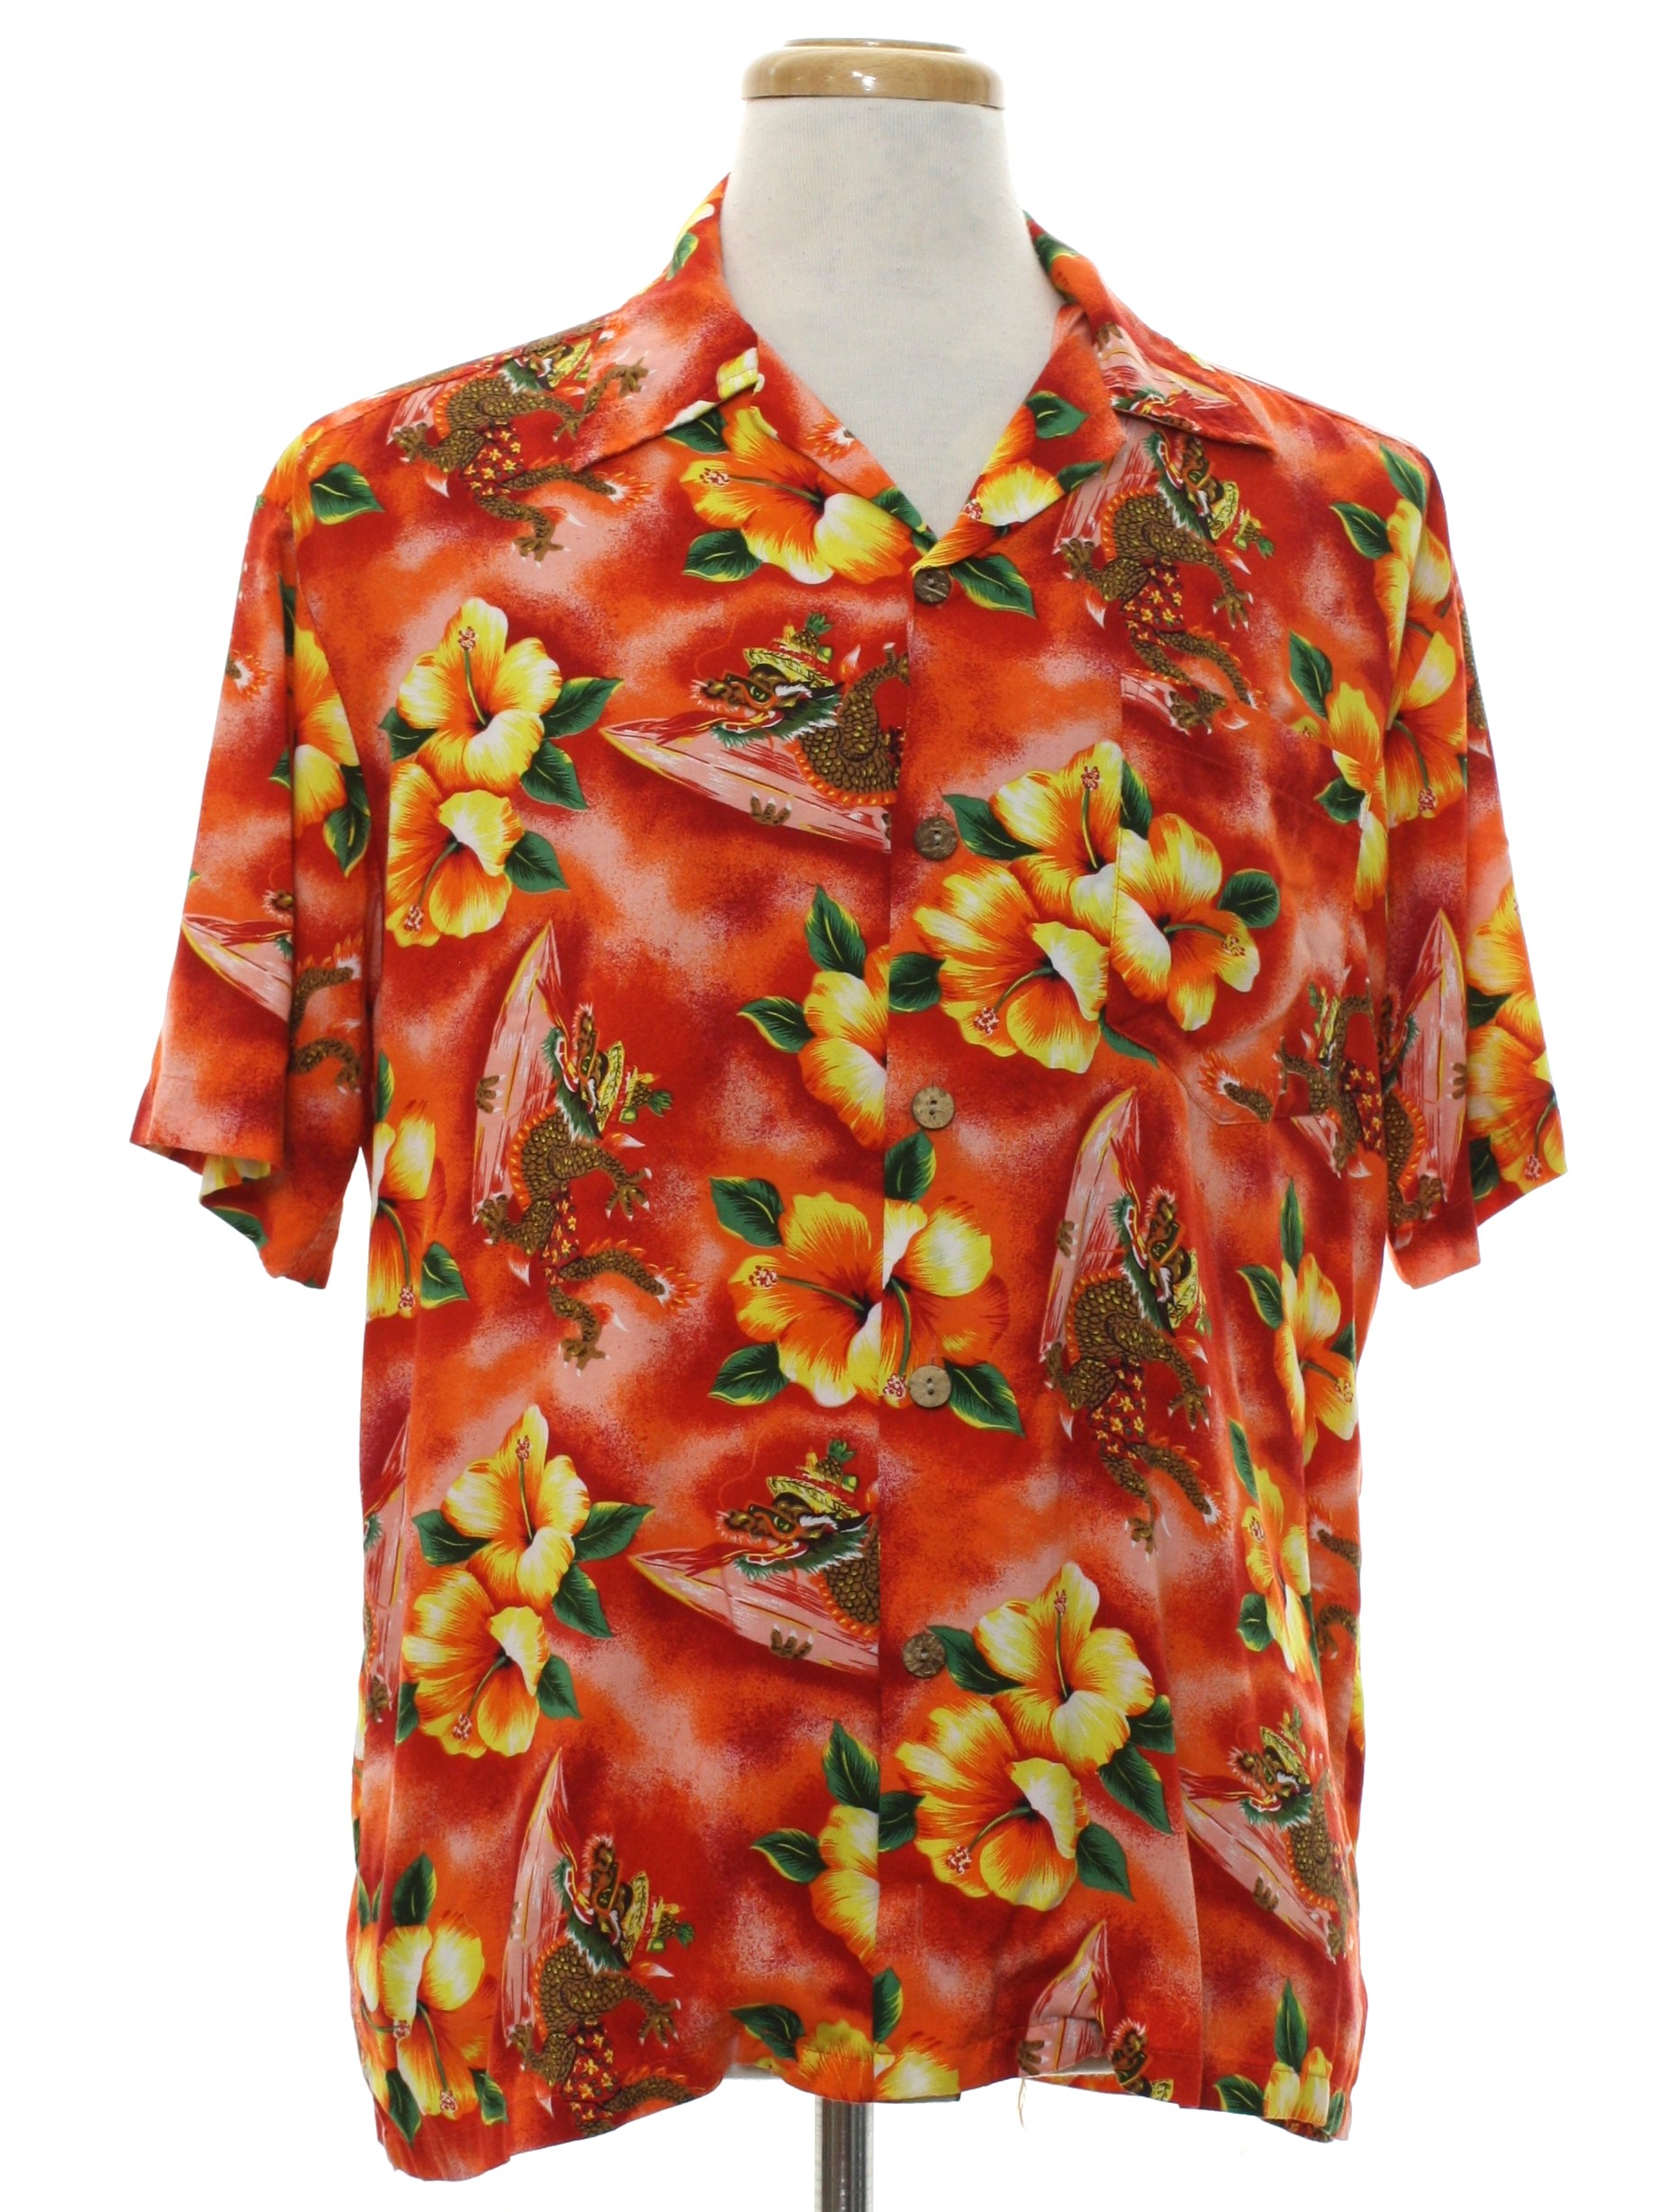 Retro 1980's Hawaiian Shirt (Kennington) : 80s -Kennington- Mens red ...